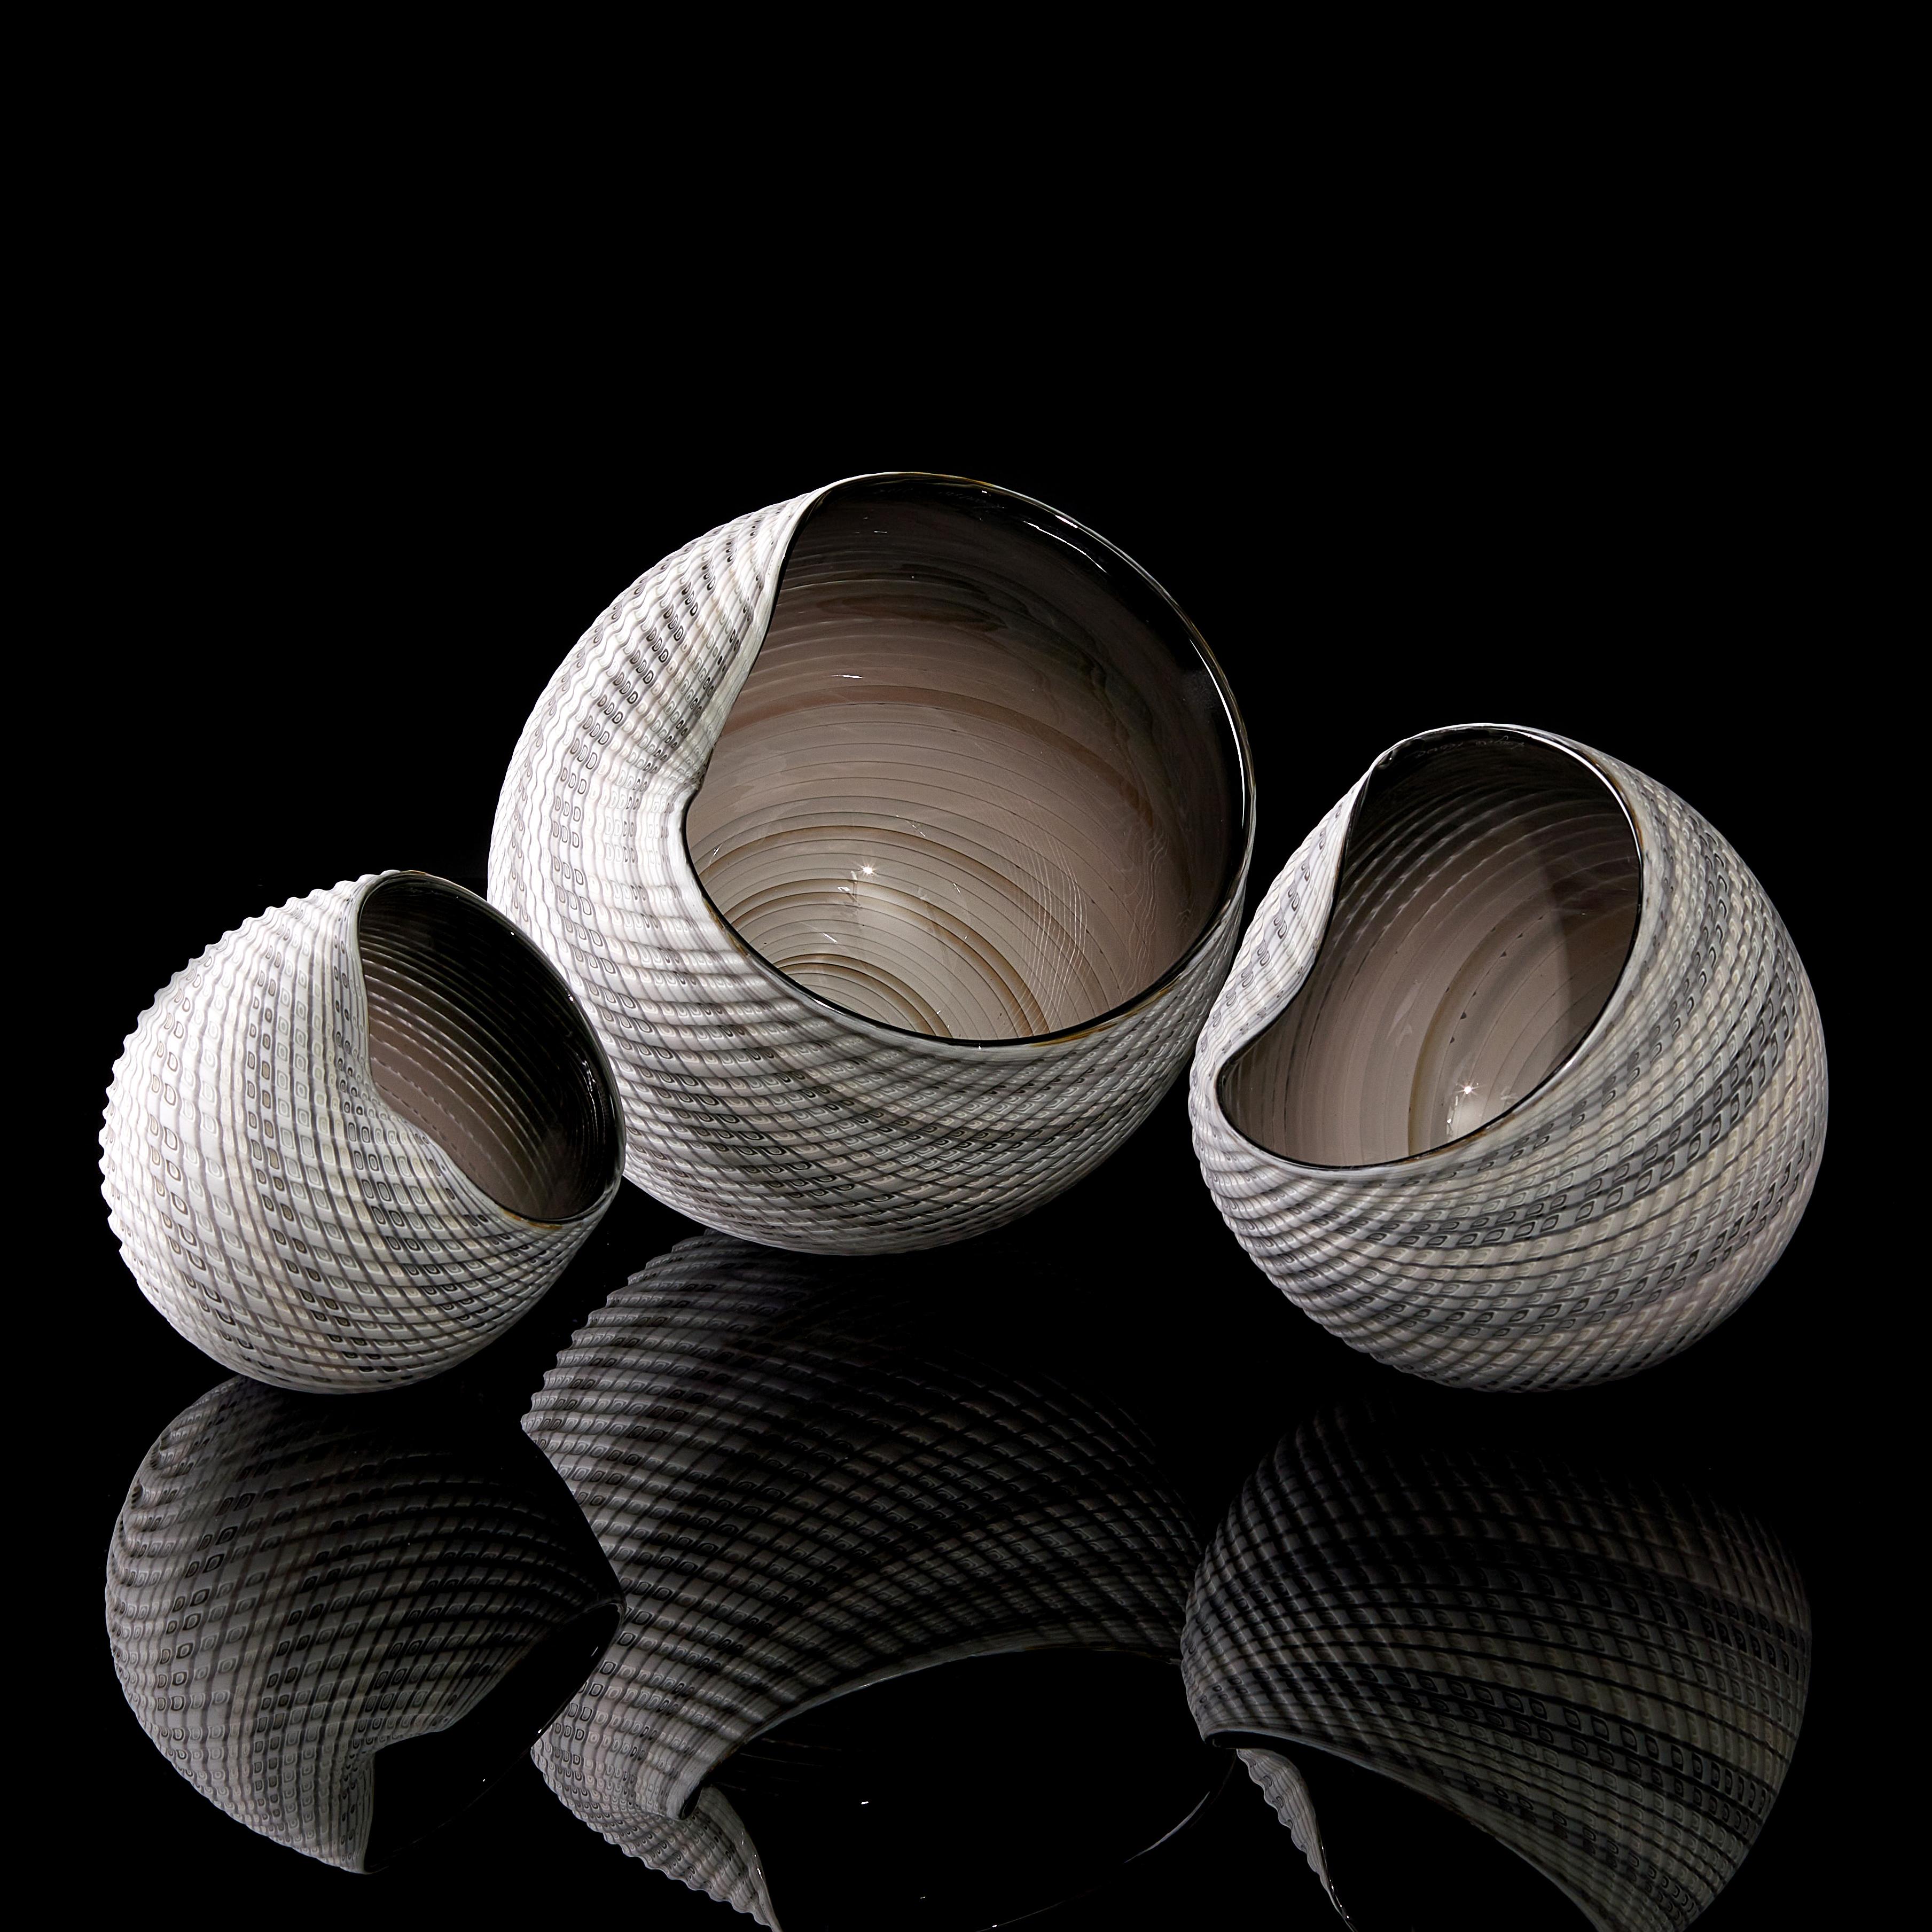 Organic Modern Woven Mandala Trio, an Organic Textured Art Glass Still Life by Layne Rowe